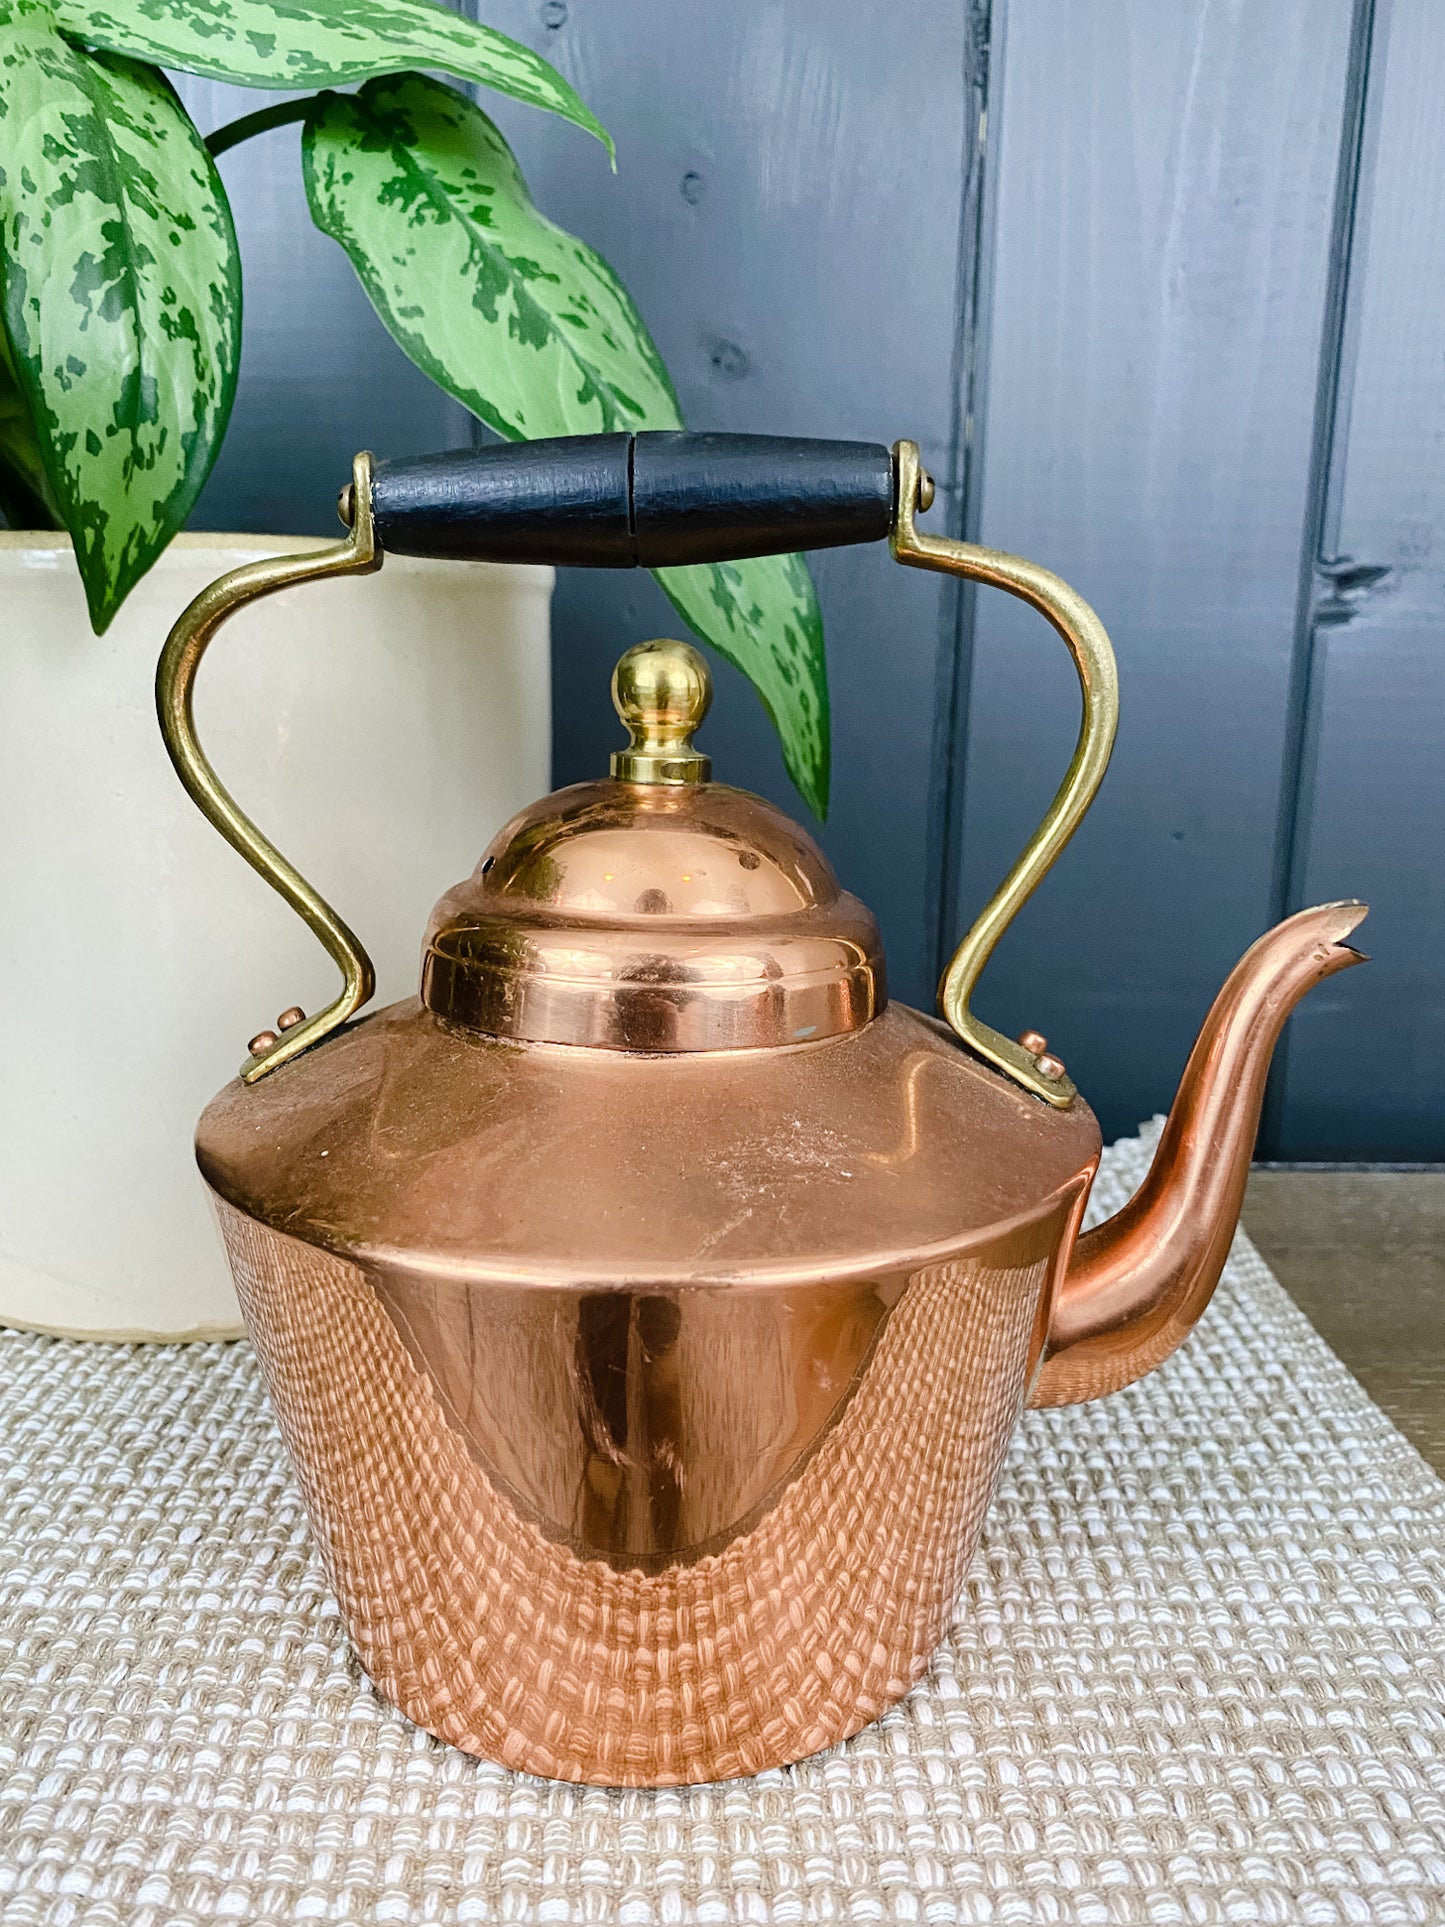 Vintage copper tea kettle with bronze handle